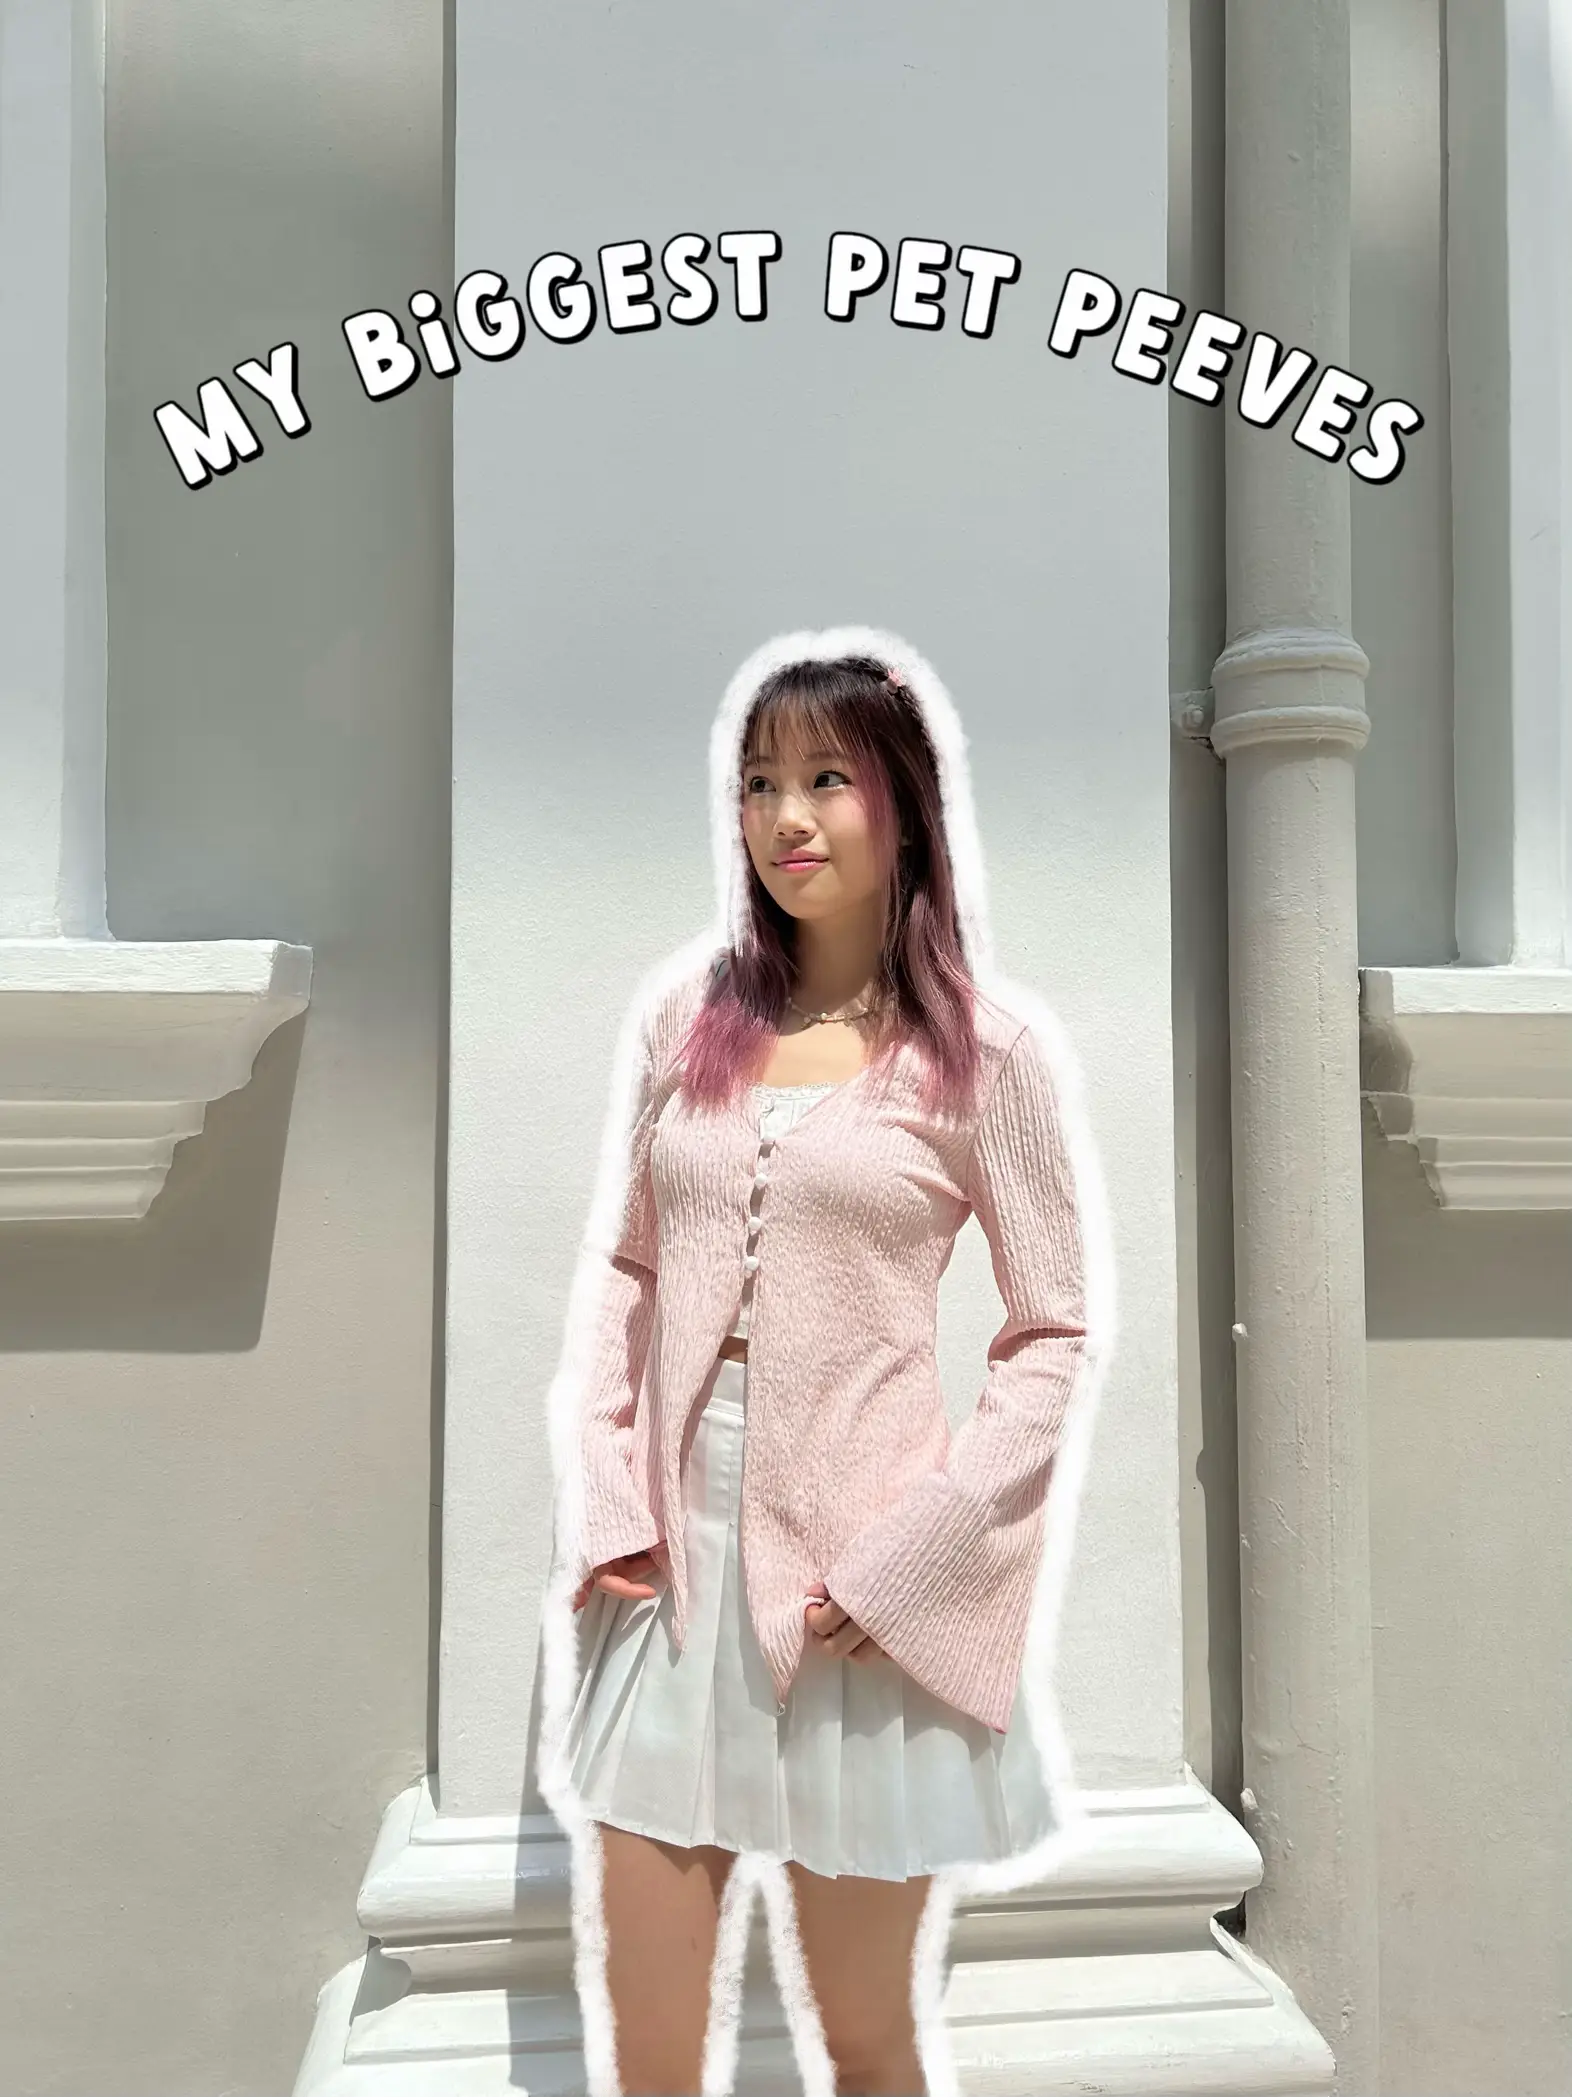 Leggings: My Biggest Pet Peeve.